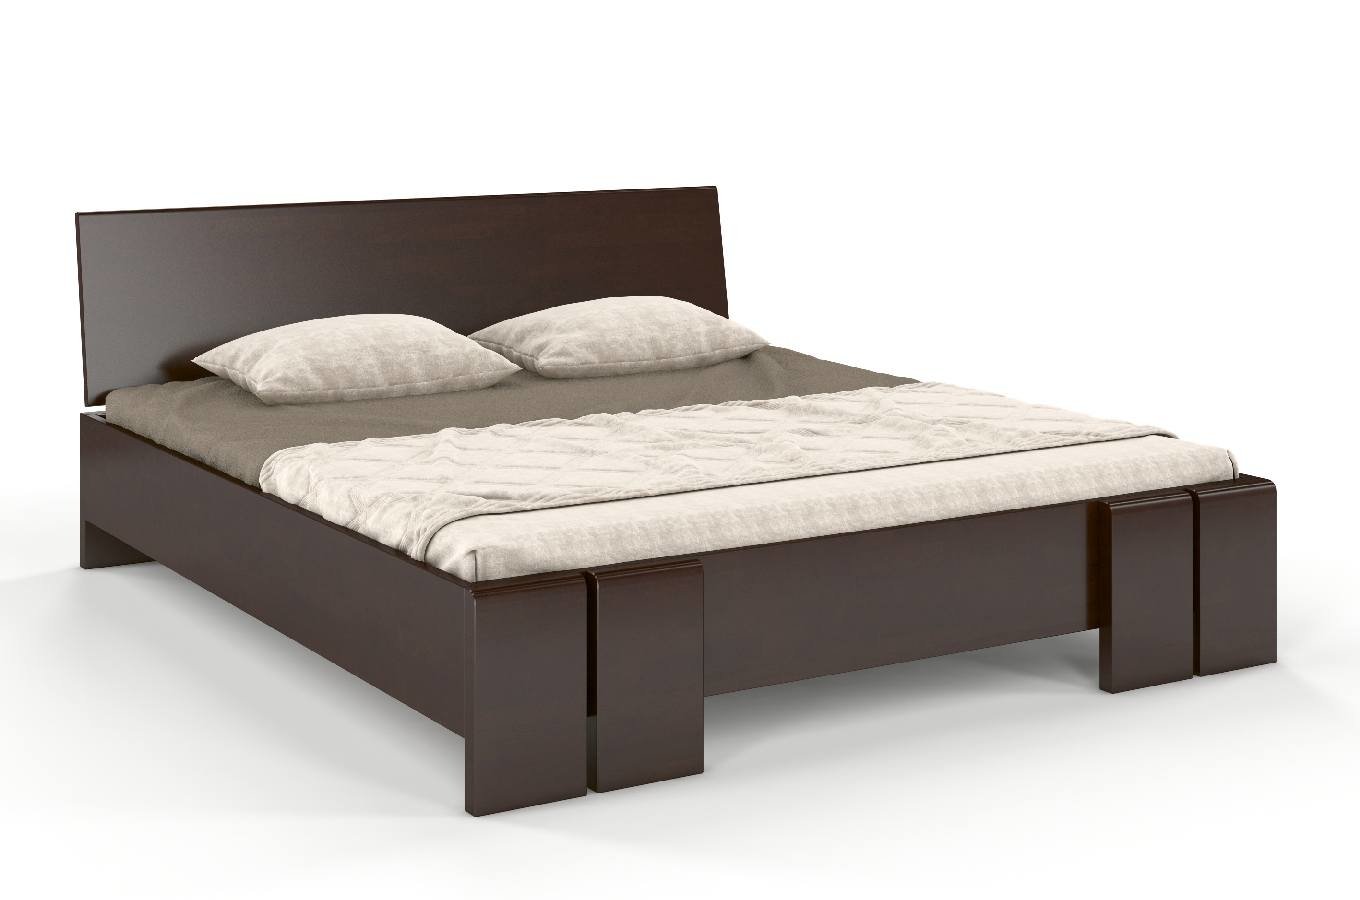 Łóżko drewniane bukowe Skandica VESTRE Maxi & Long / 200x220 cm, kolor palisander